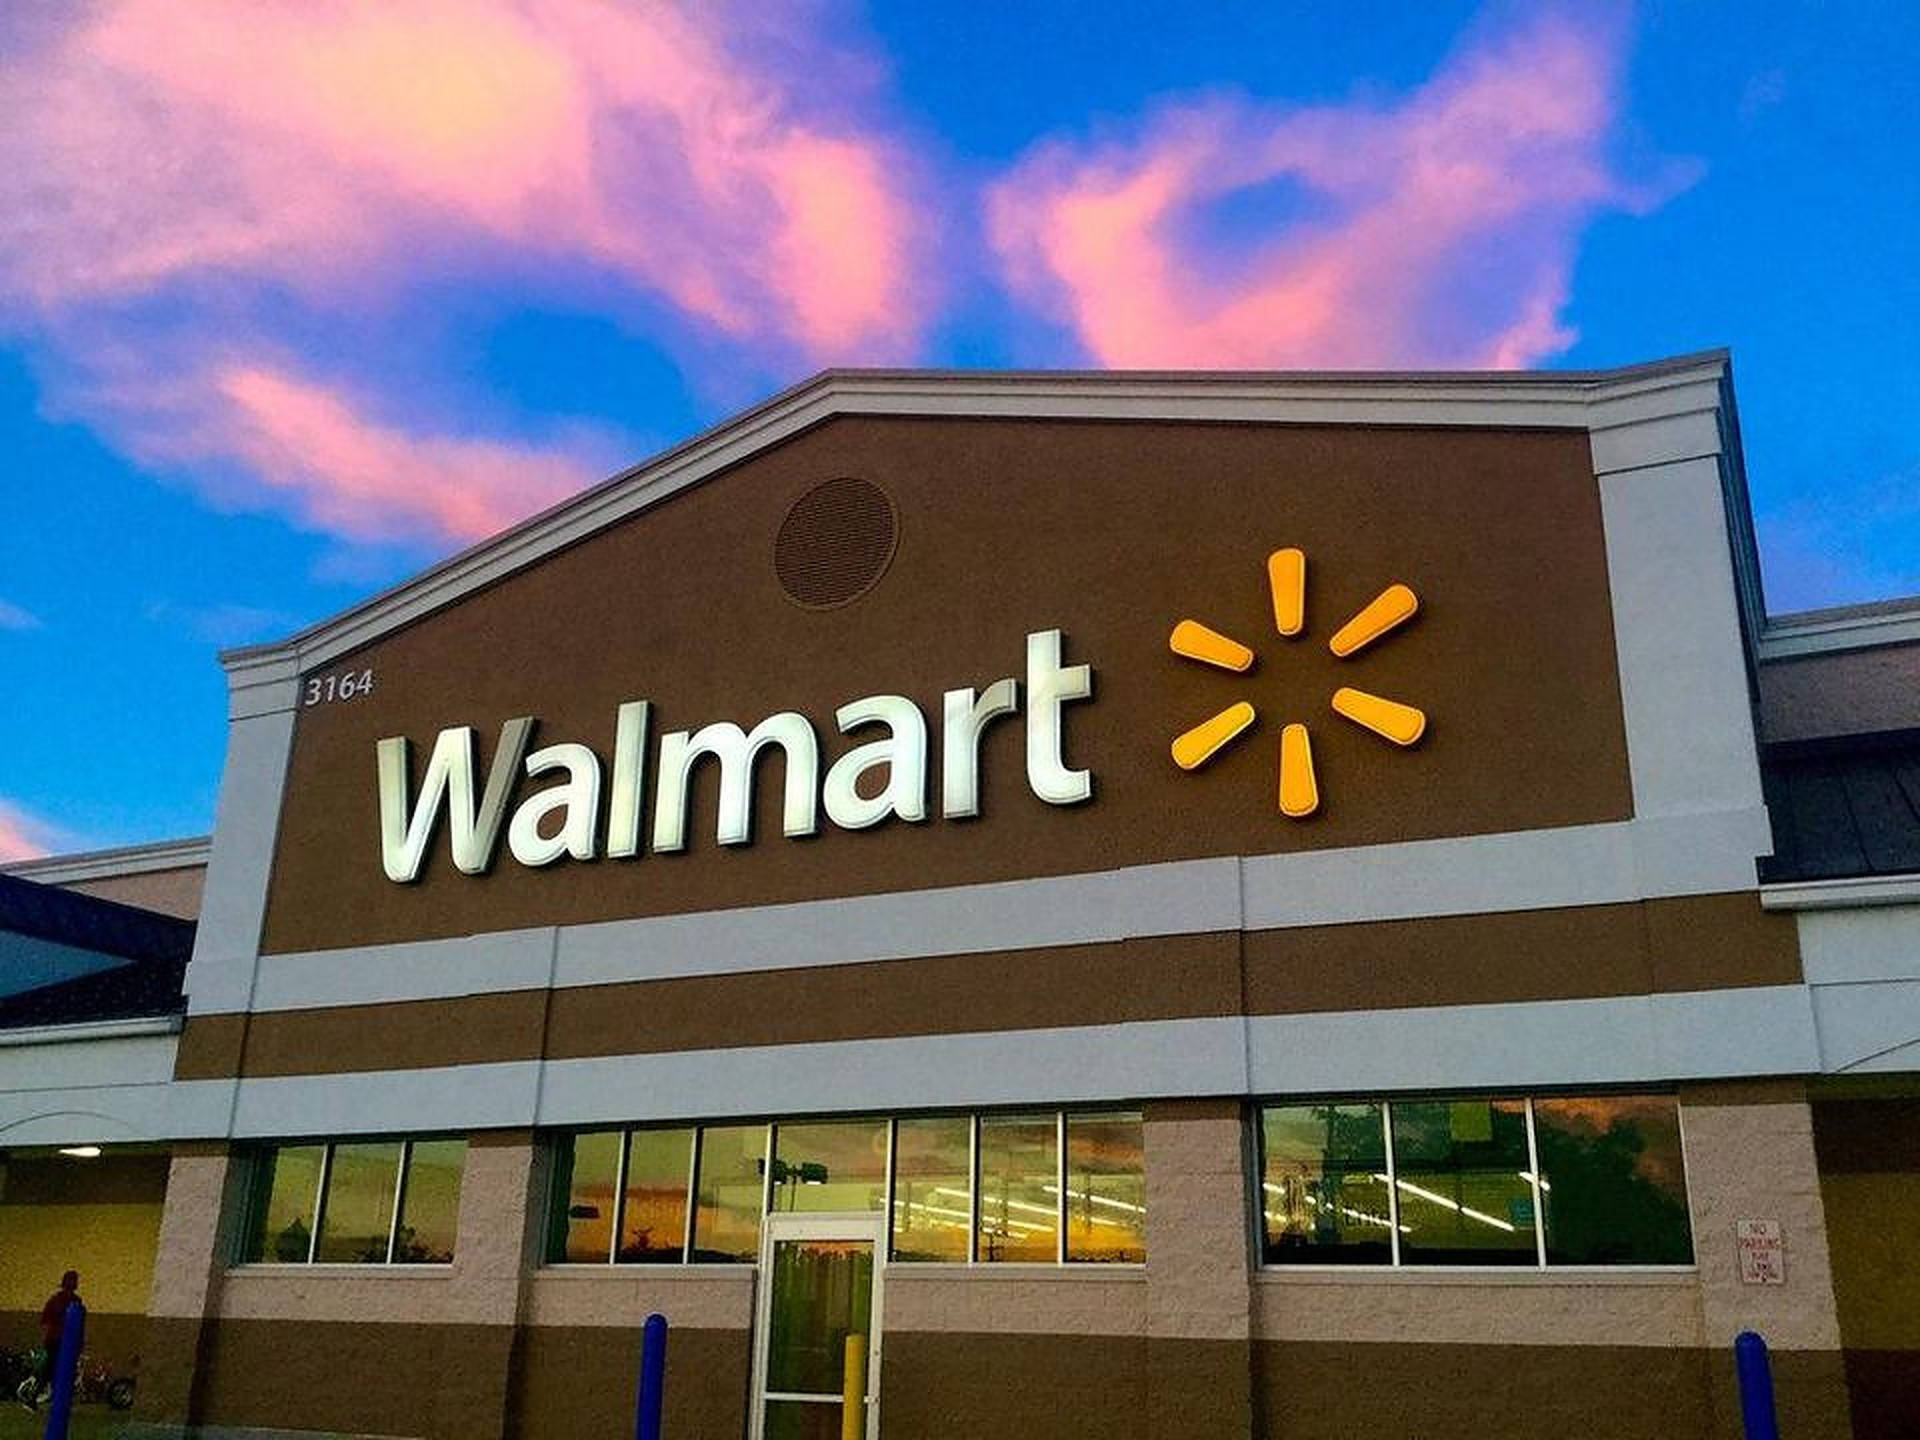 Walmart Building During Sunset Wallpaper